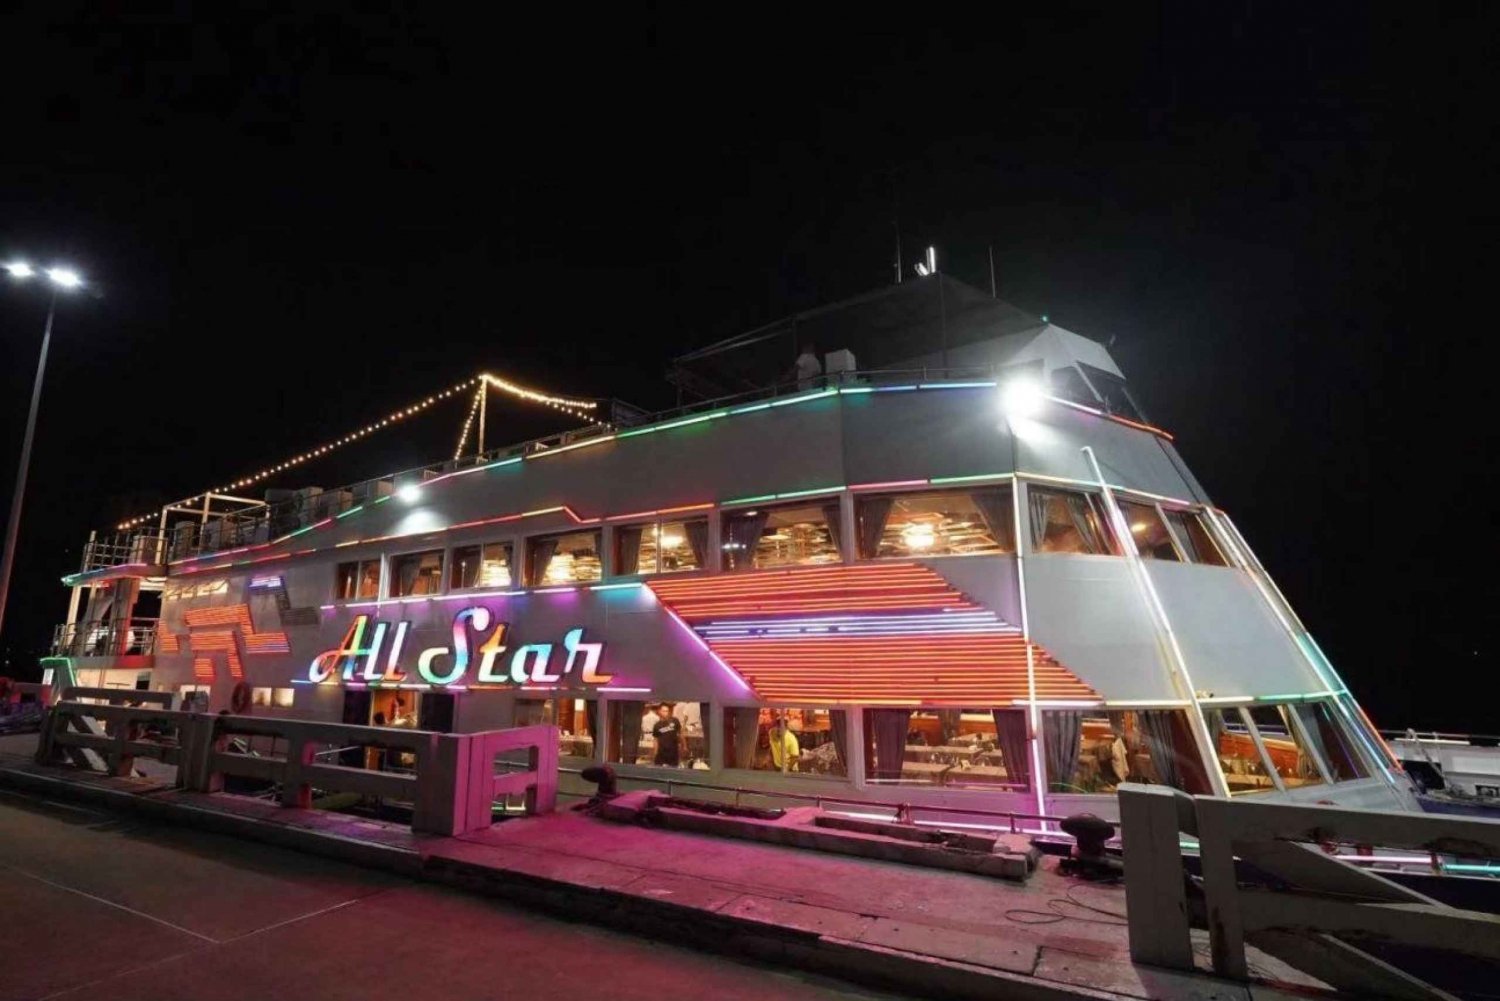 Pattaya: All Star Dinner Cruise, Cabaret Show & Olutbuffet.